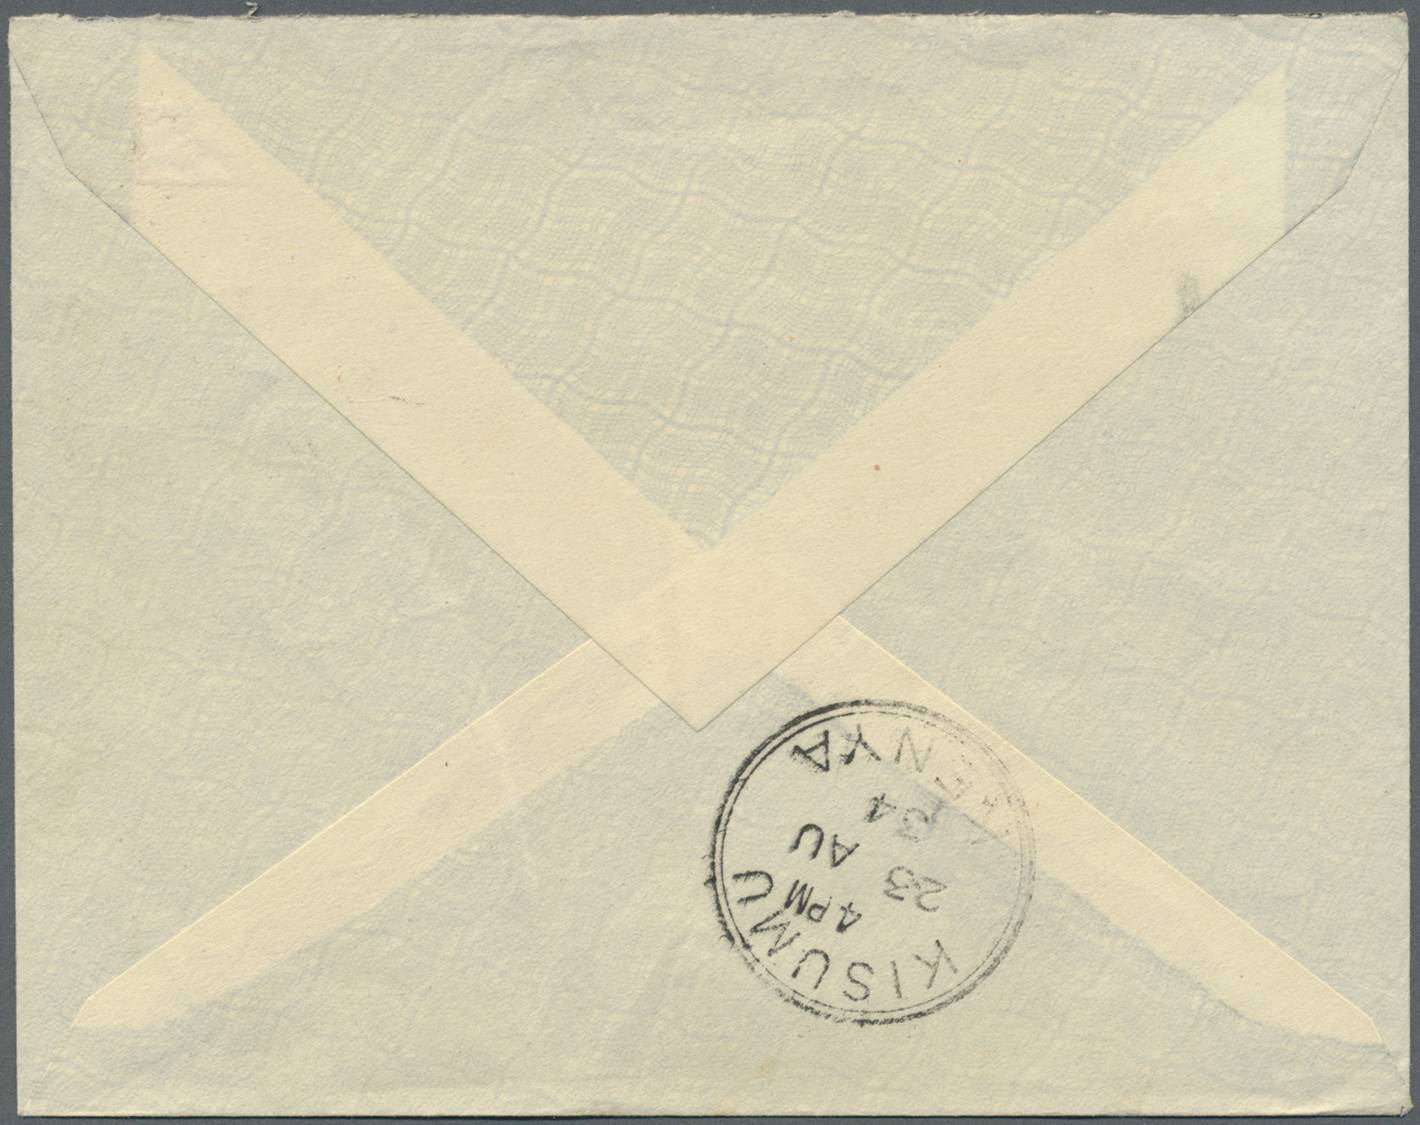 Br Kenia - Britisch Ostafrika: 1934. Air Mail Envelope Addressed To London Bearing SG 82, 15c Carmine And SG 85, 50c Gre - British East Africa